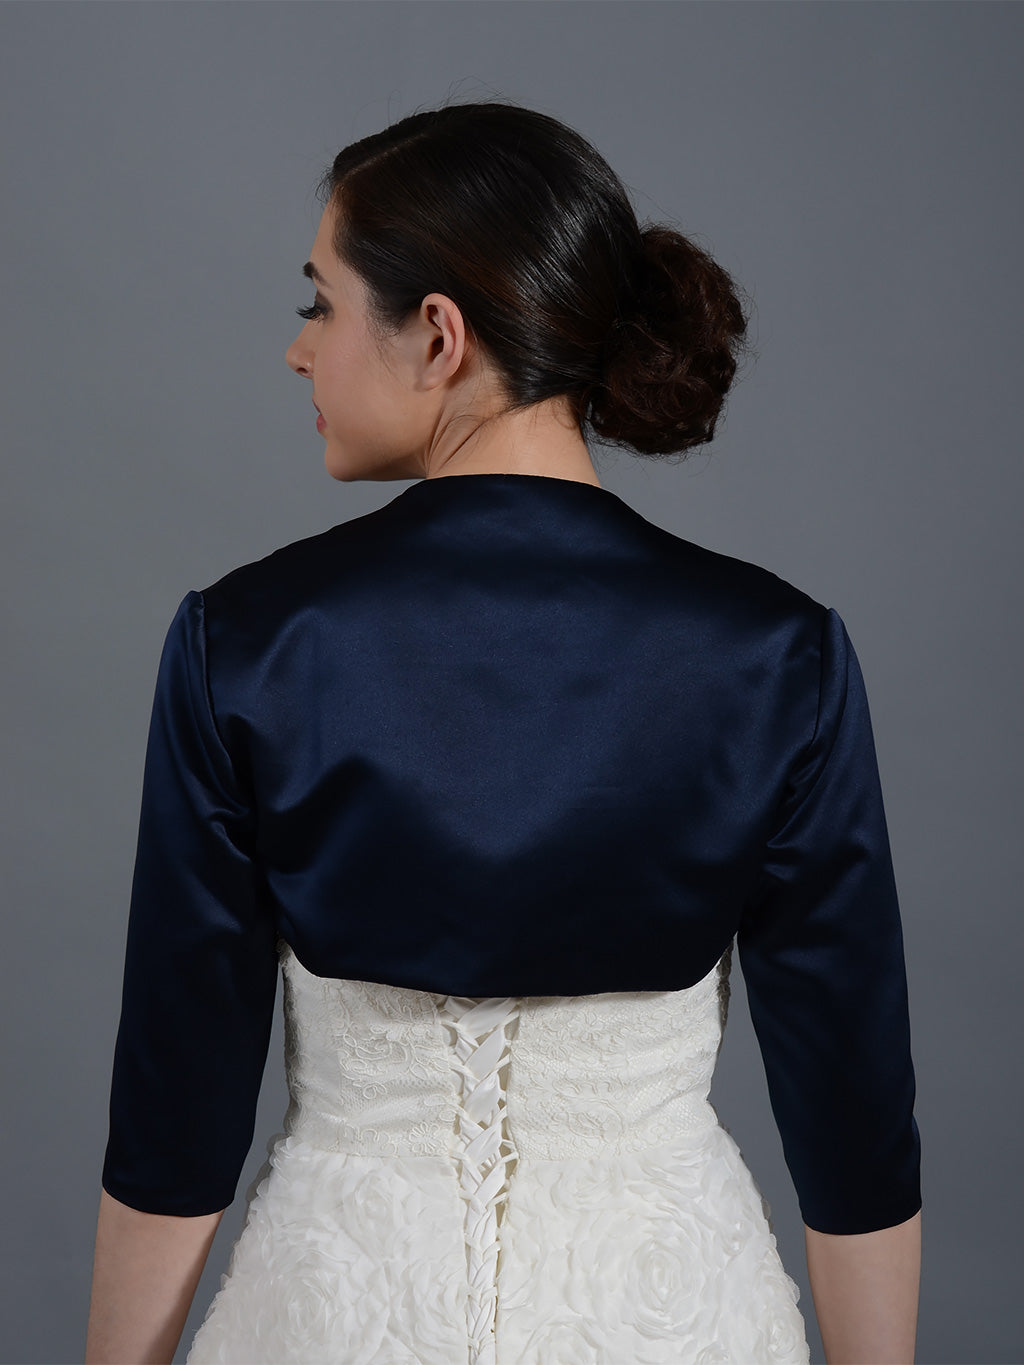 Navy Blue 3/4 sleeve wedding satin bolero jacket – Tulip Bridal